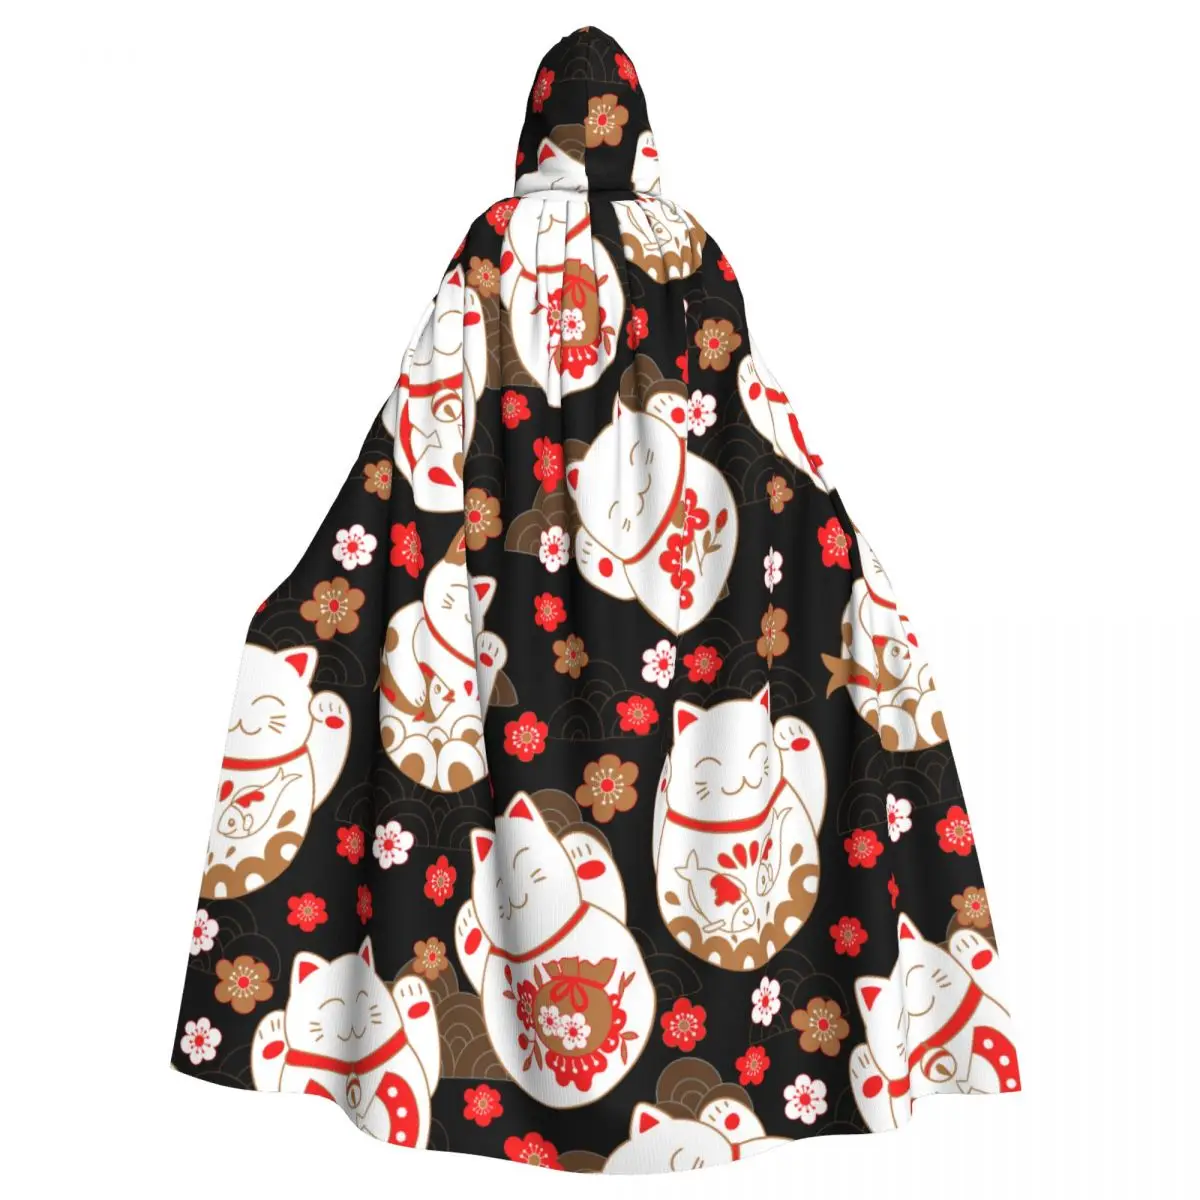 

Cats Maneki Neko Lucky Charms And Sakura Flowers Hooded Cloak Polyester Unisex Witch Cape Costume Accessory